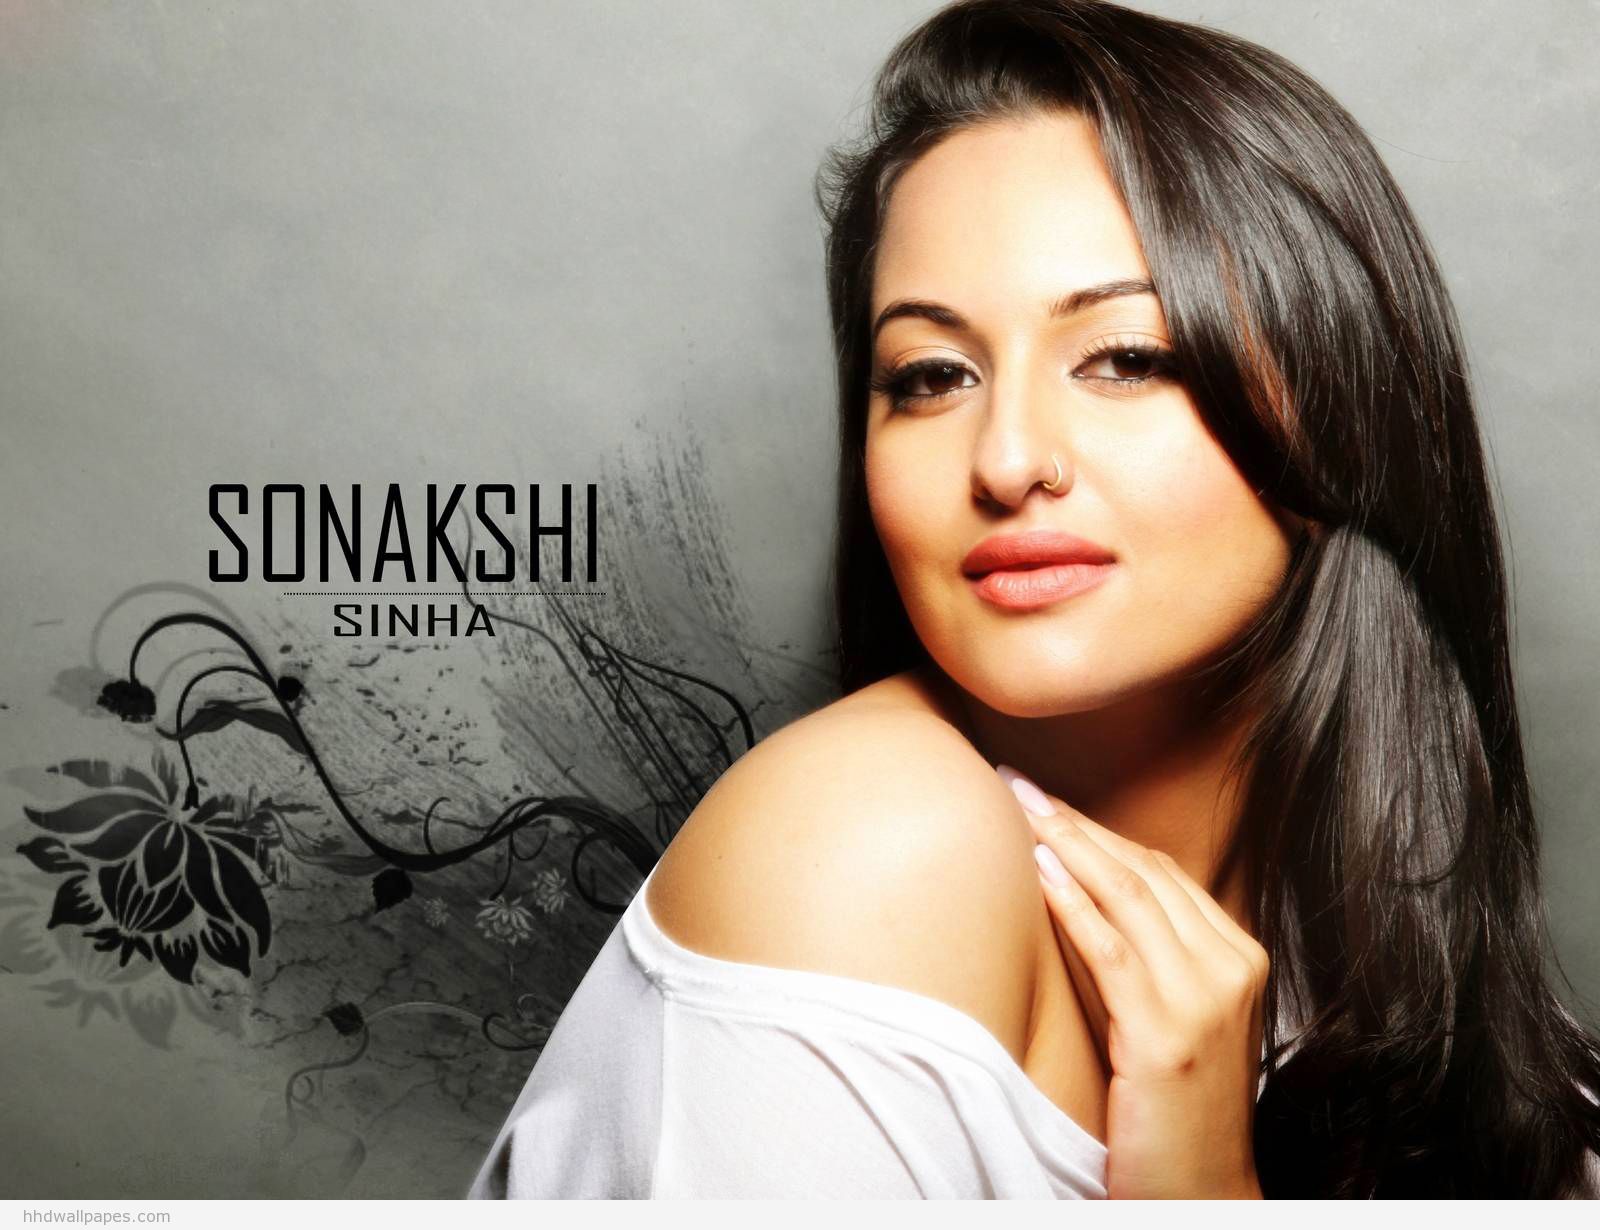 Sonakshi Sinha Sex Videos - 48+] Bollywood Wallpaper 2015 - WallpaperSafari